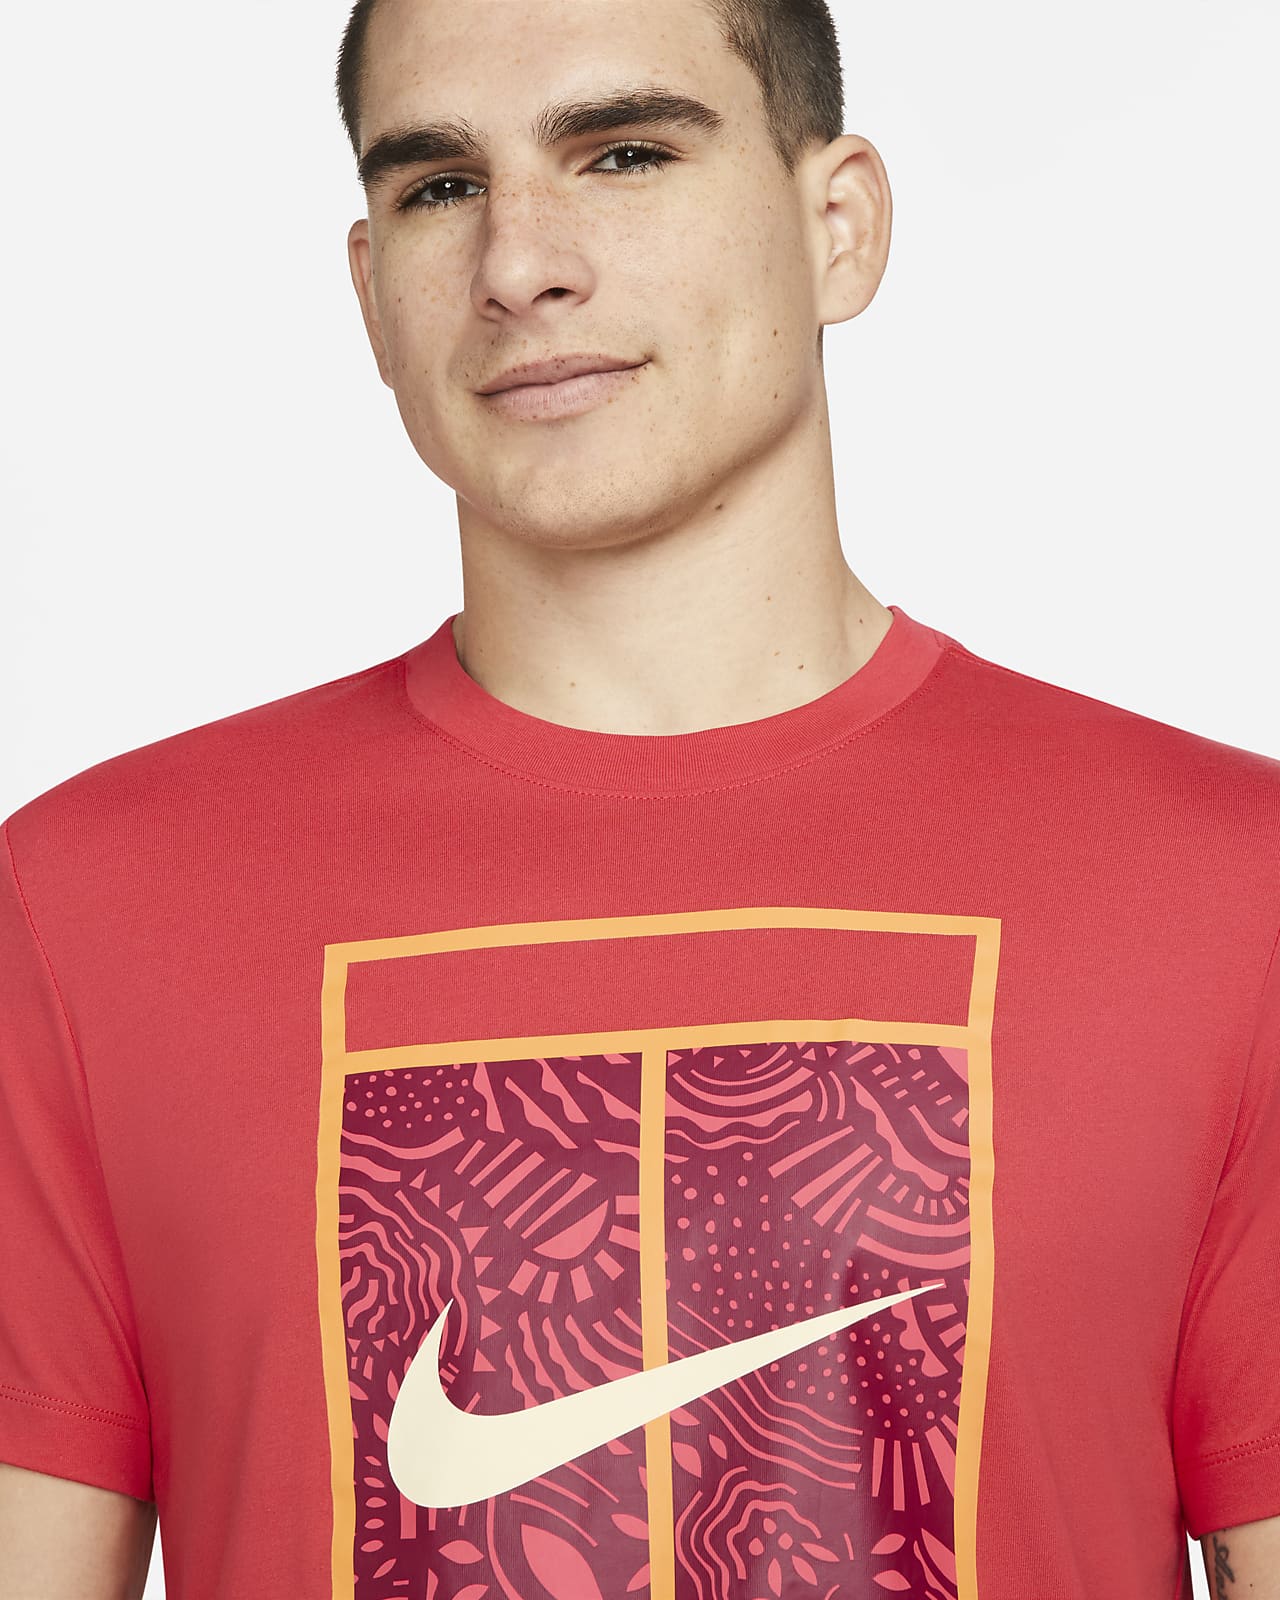 NikeCourt Dri-FIT Men's Tennis T-Shirt.